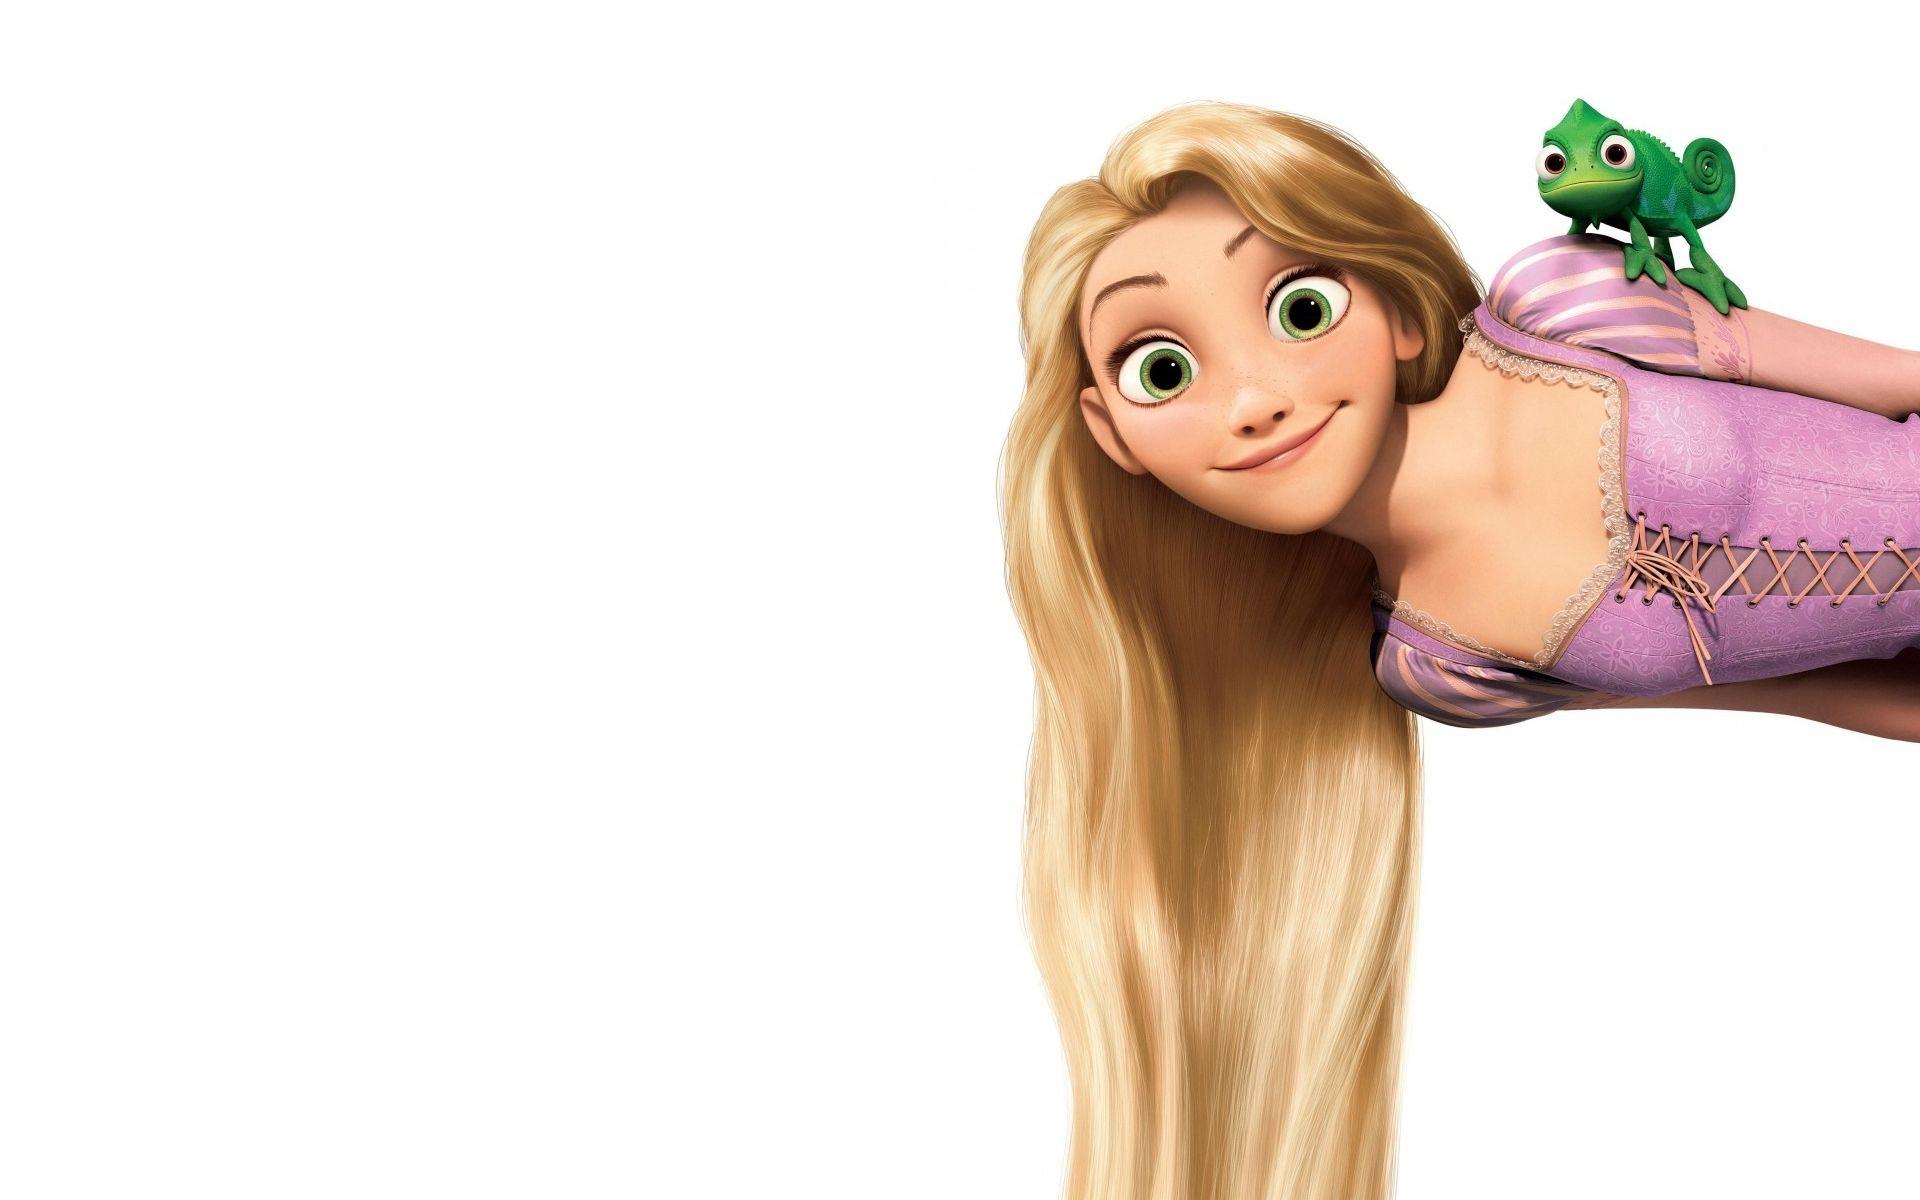 Rapunzel- The Disney roleplay